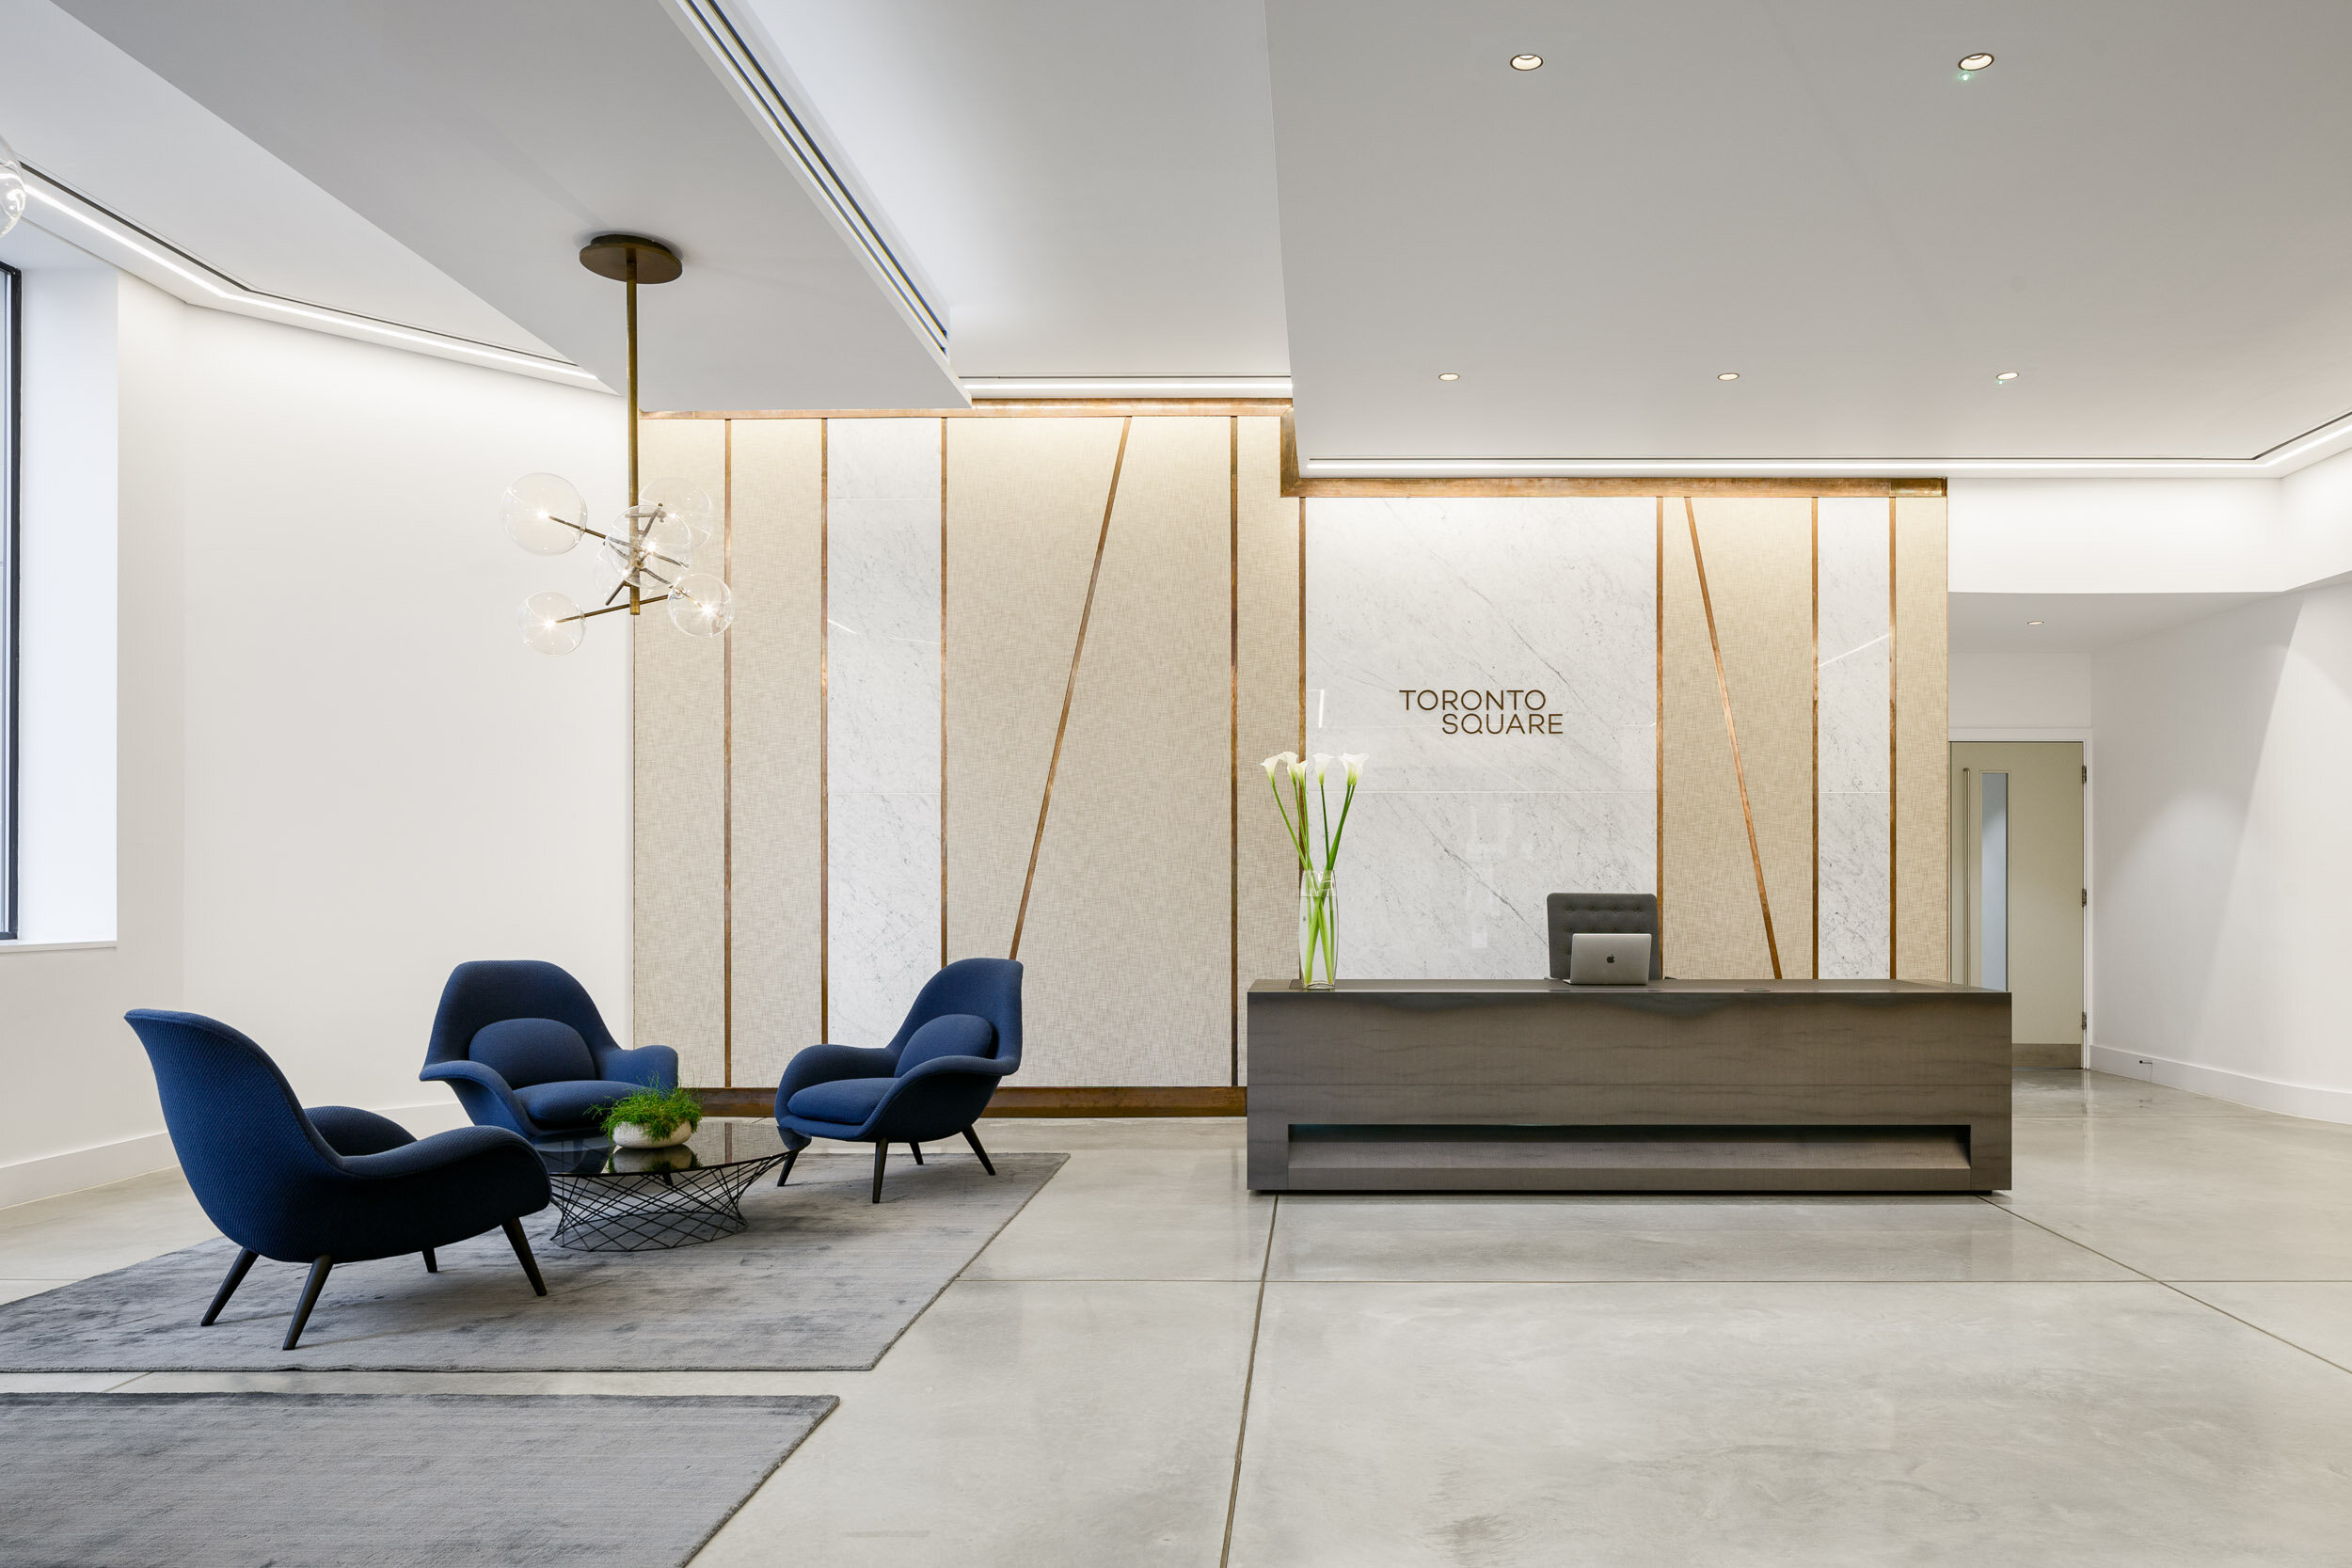 modern refurbished office interior reception interior design photograph toronto square leeds city centre.jpg